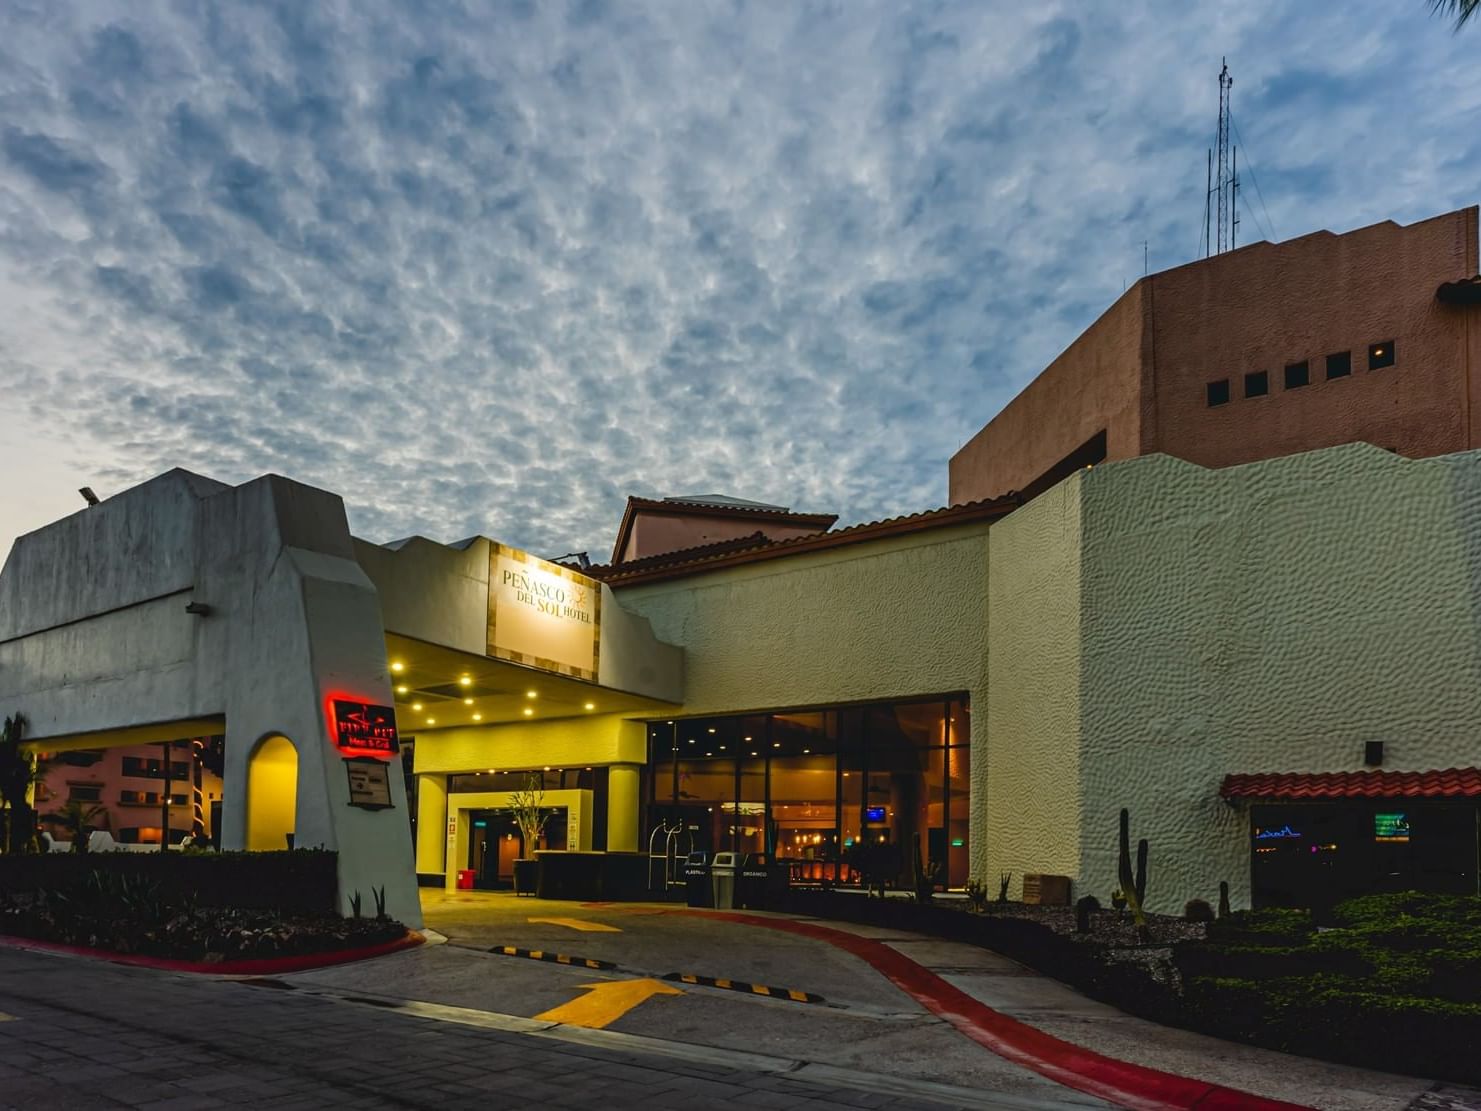 Exterior view of the Main Entrance at Peñasco del Sol Hotel